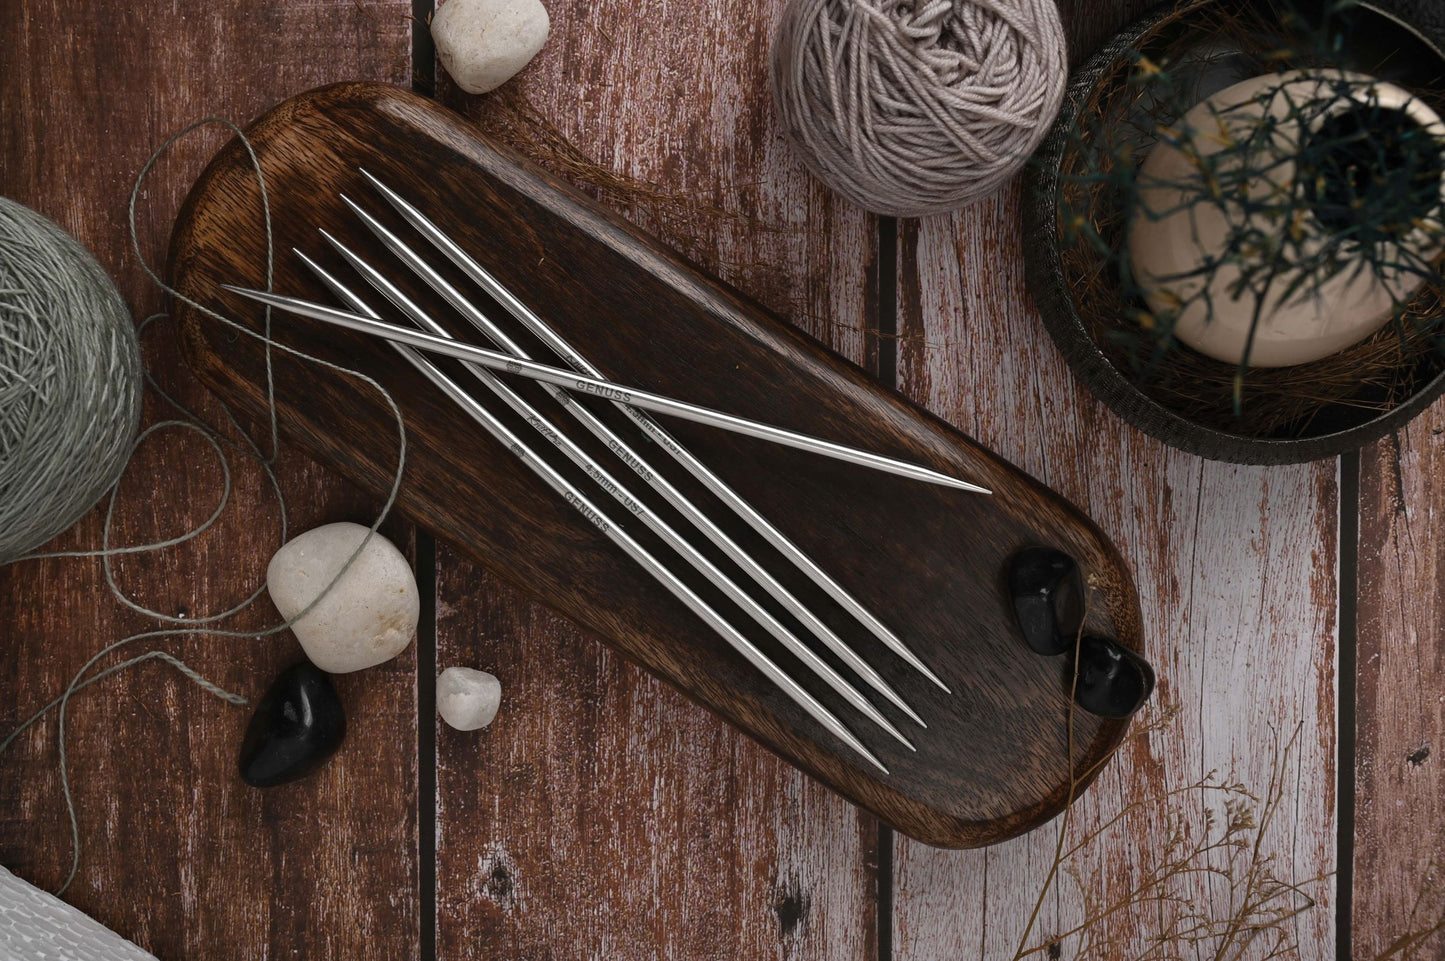 KnitPro Mindful Kollektion, Nadelspiel / Sockenstricknadeln 15cm, aus hochwertigem Edelstahl